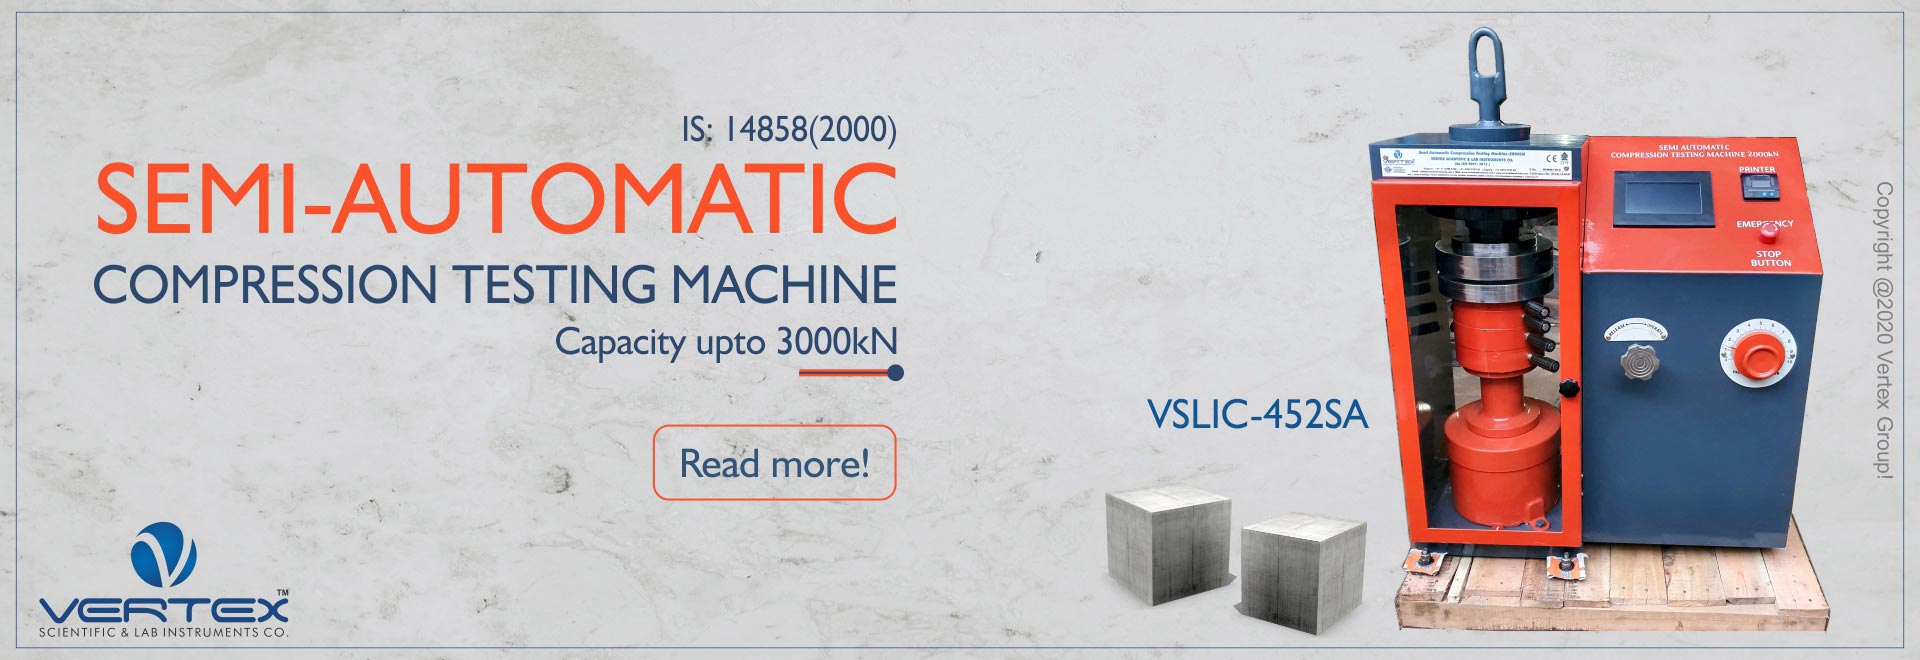 Semi Automatic Compression Testing Machine 2000kN-India